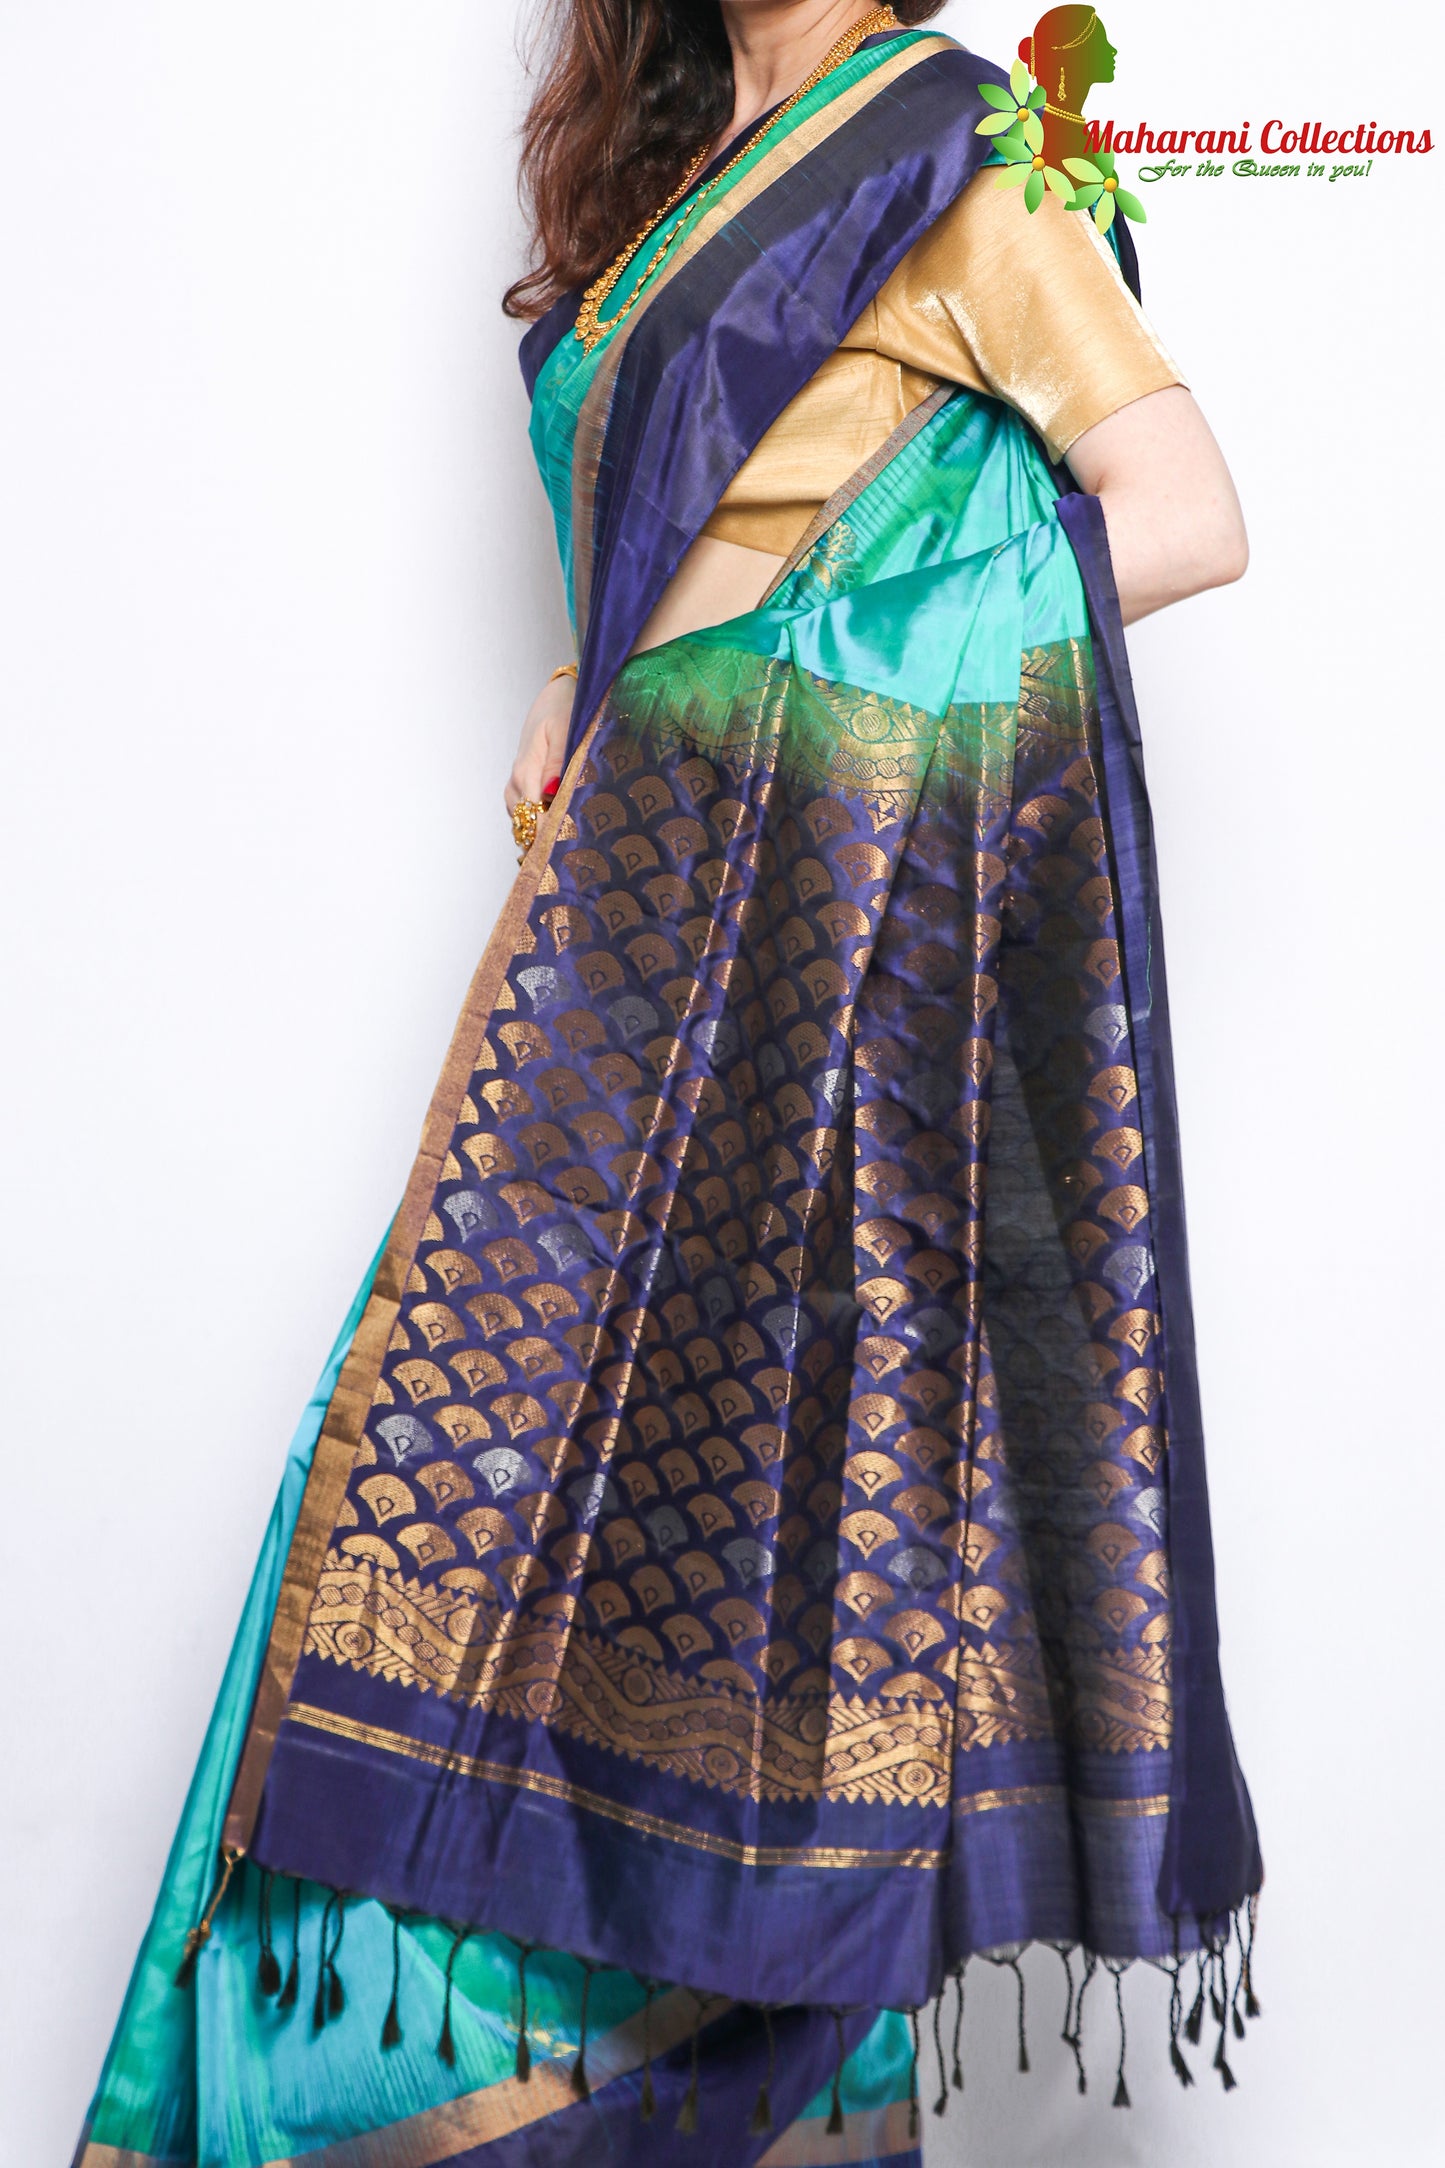 Maharani's Pure Handloom Kanjivaram Silk Saree - Turquoise with Blue Pallu and Golden Zari Border